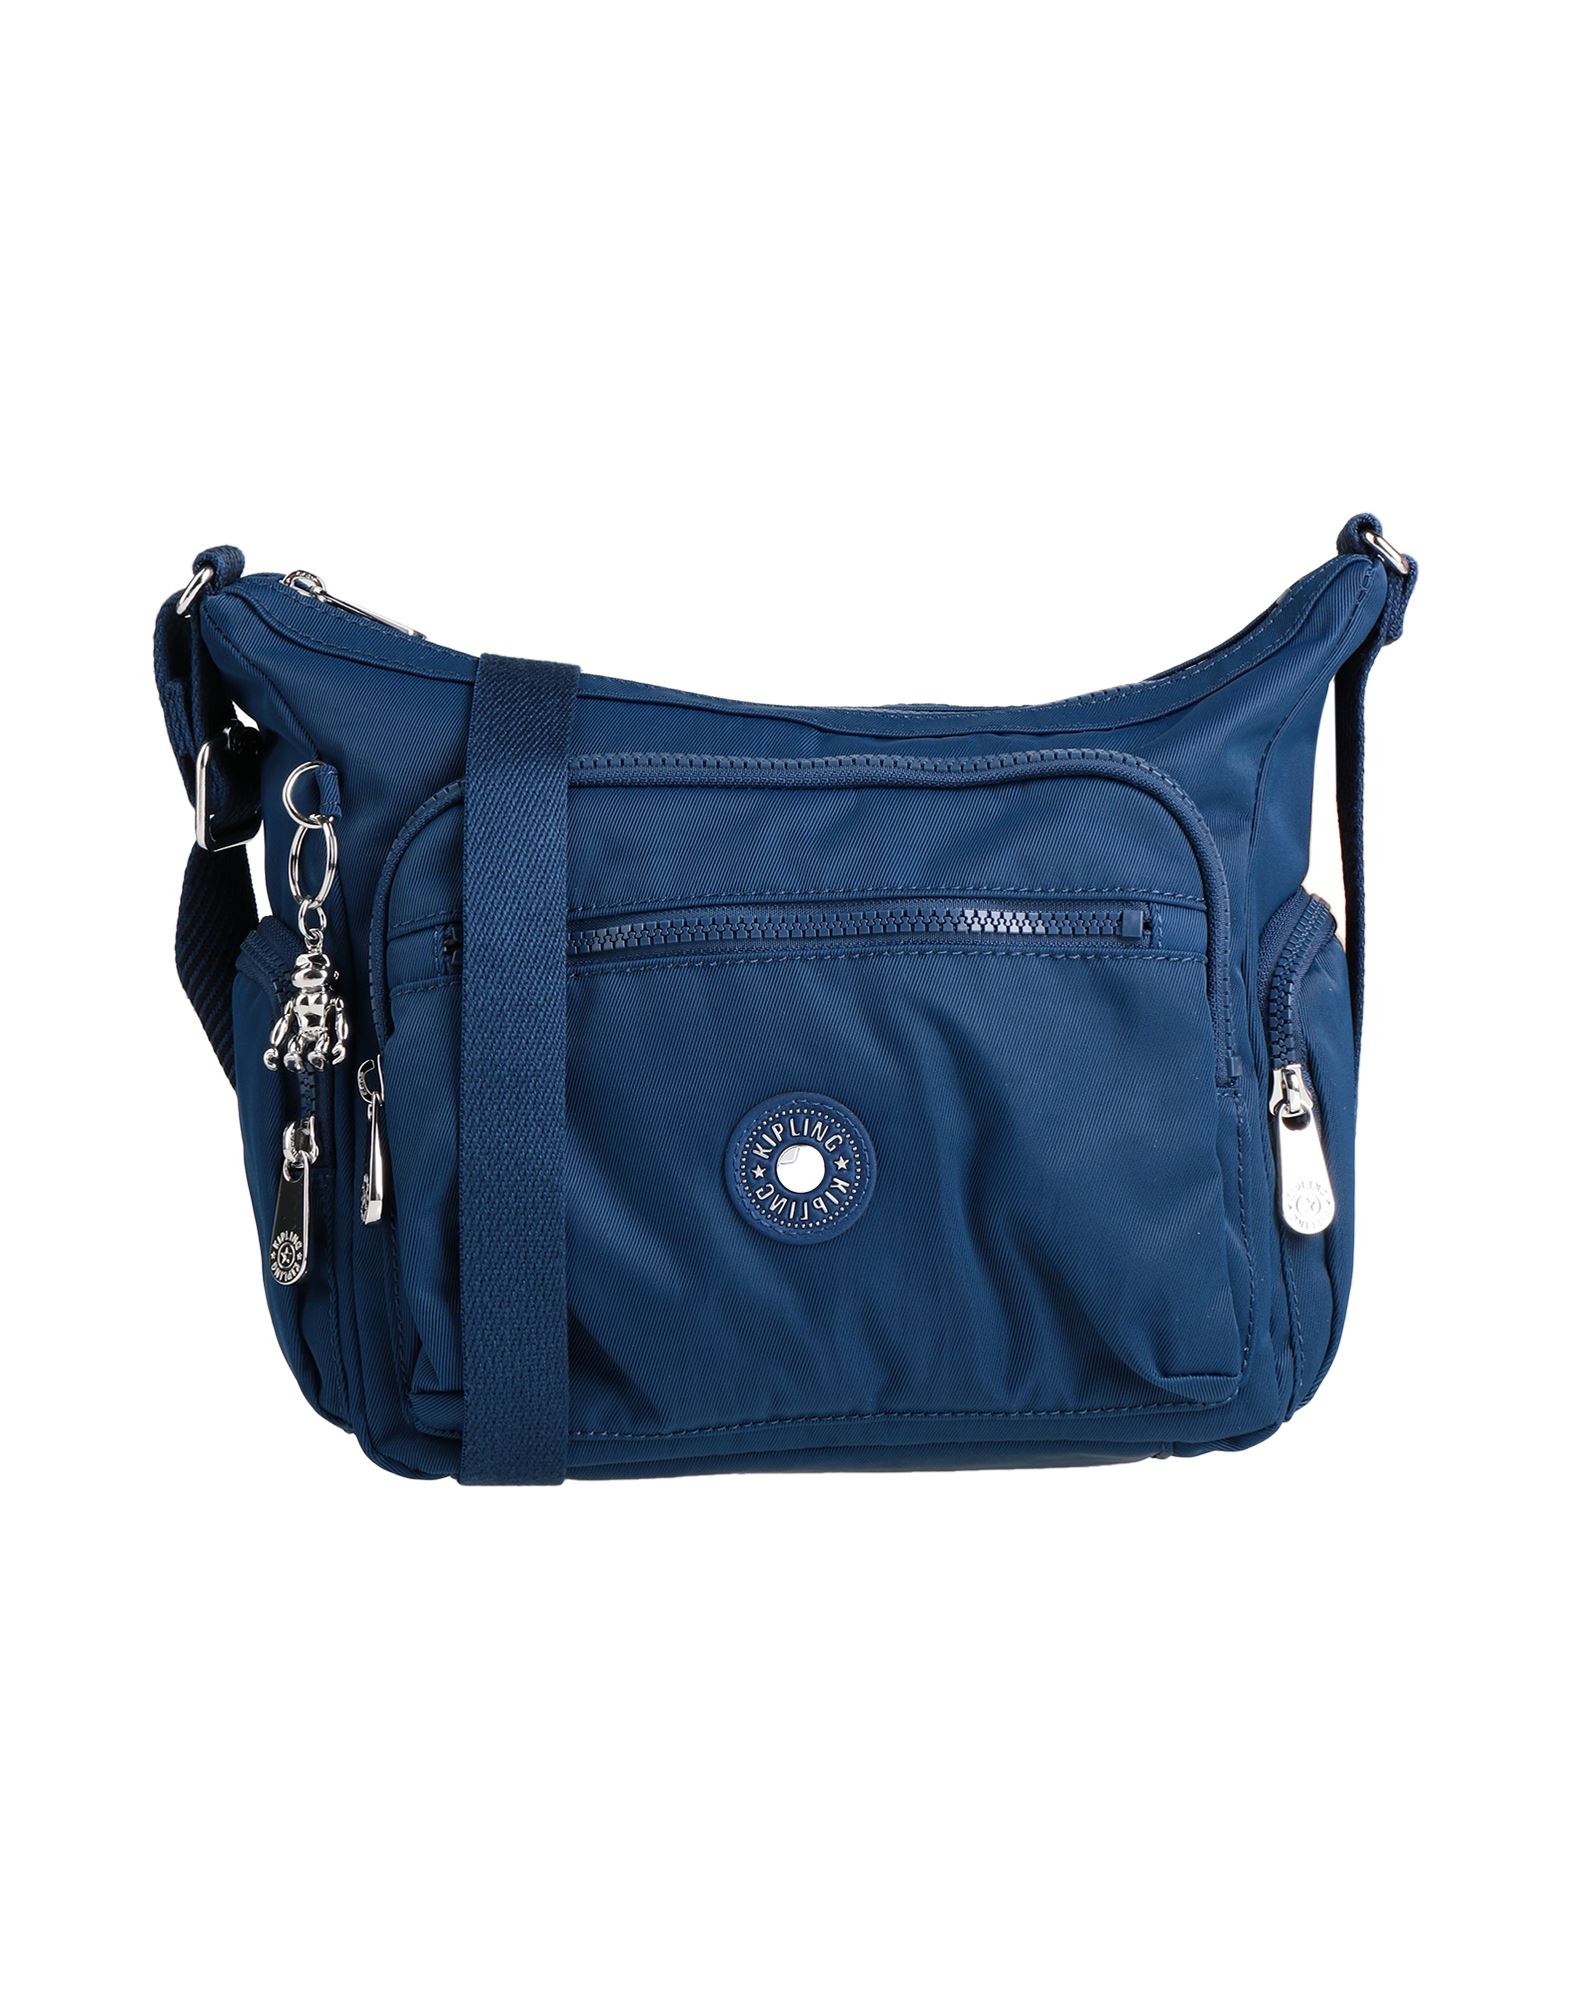 Kipling Handbags In Blue